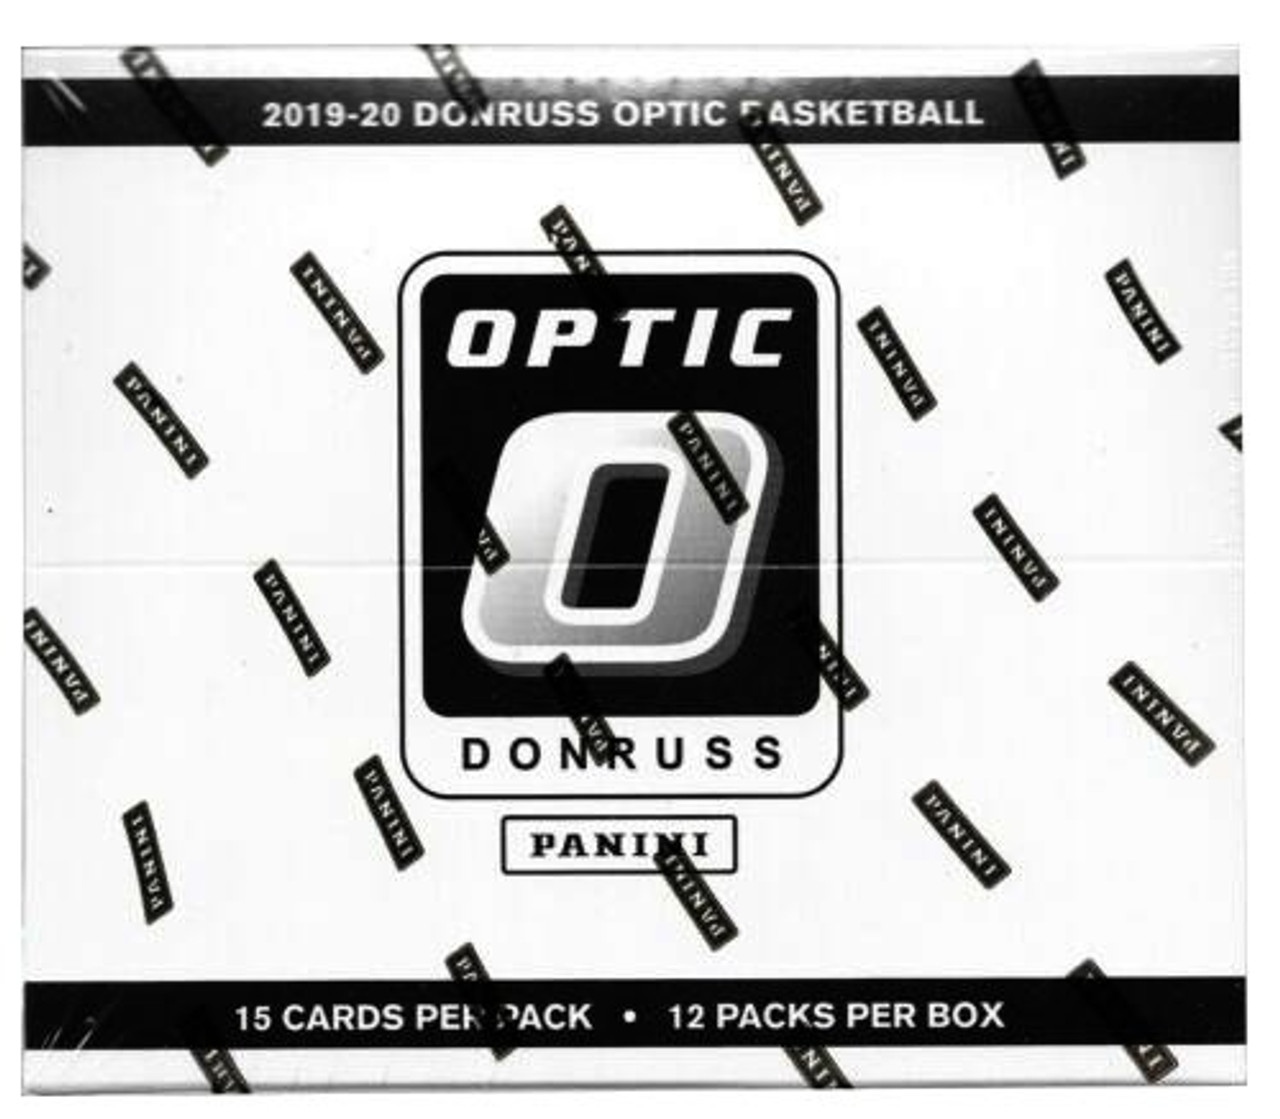 Nba Panini 2019 20 Donruss Optic Basketball Trading Card Cello Box 12 Packs Toywiz - roblox assassin demon heart value roblox generator 2018 no